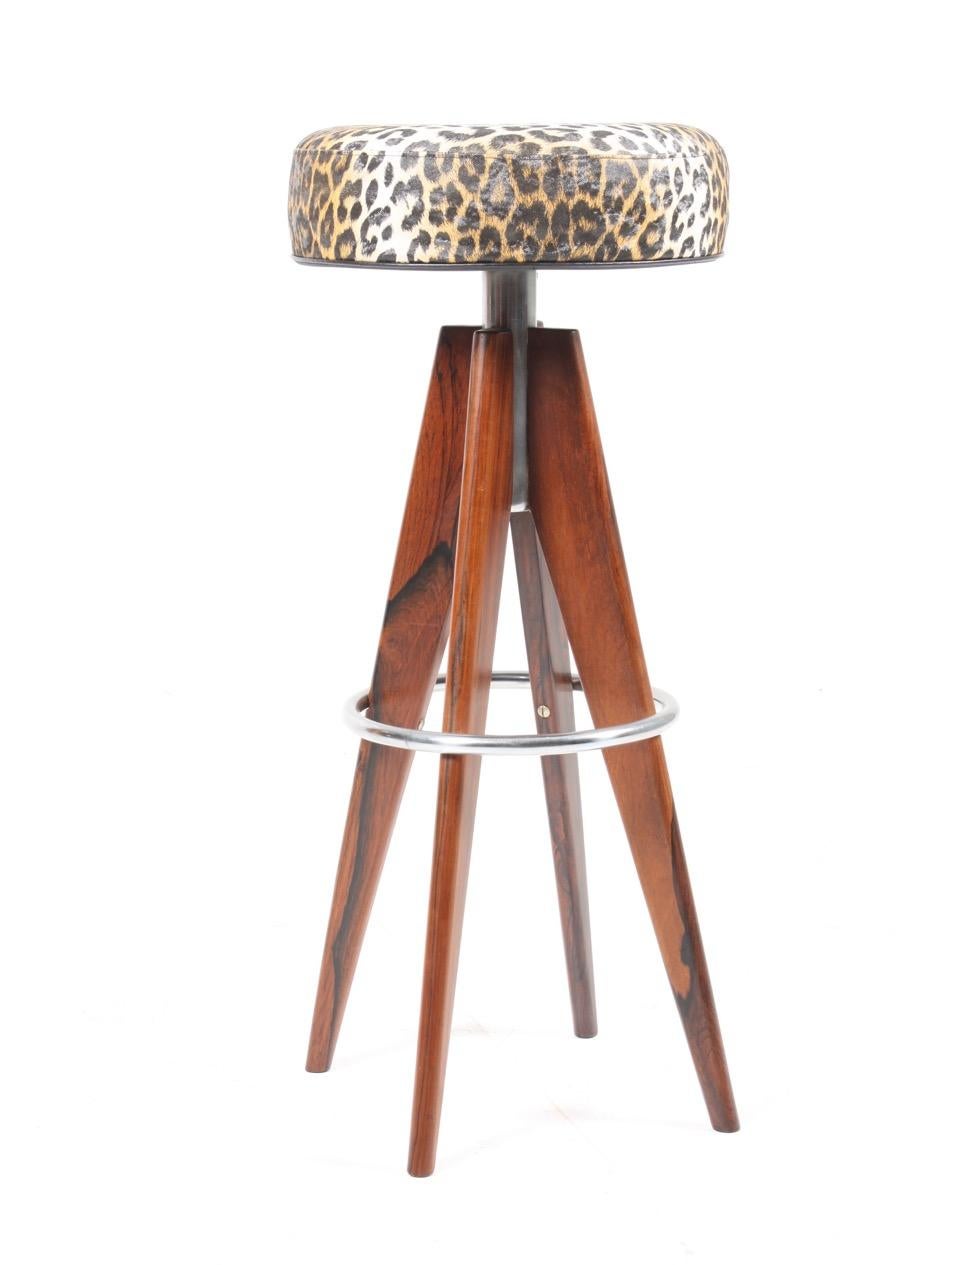 Set of four bar stools in Brazilian rosewood & leopard print seats - Design by Arne Hovmand Olsen Denmark - Great original condition.